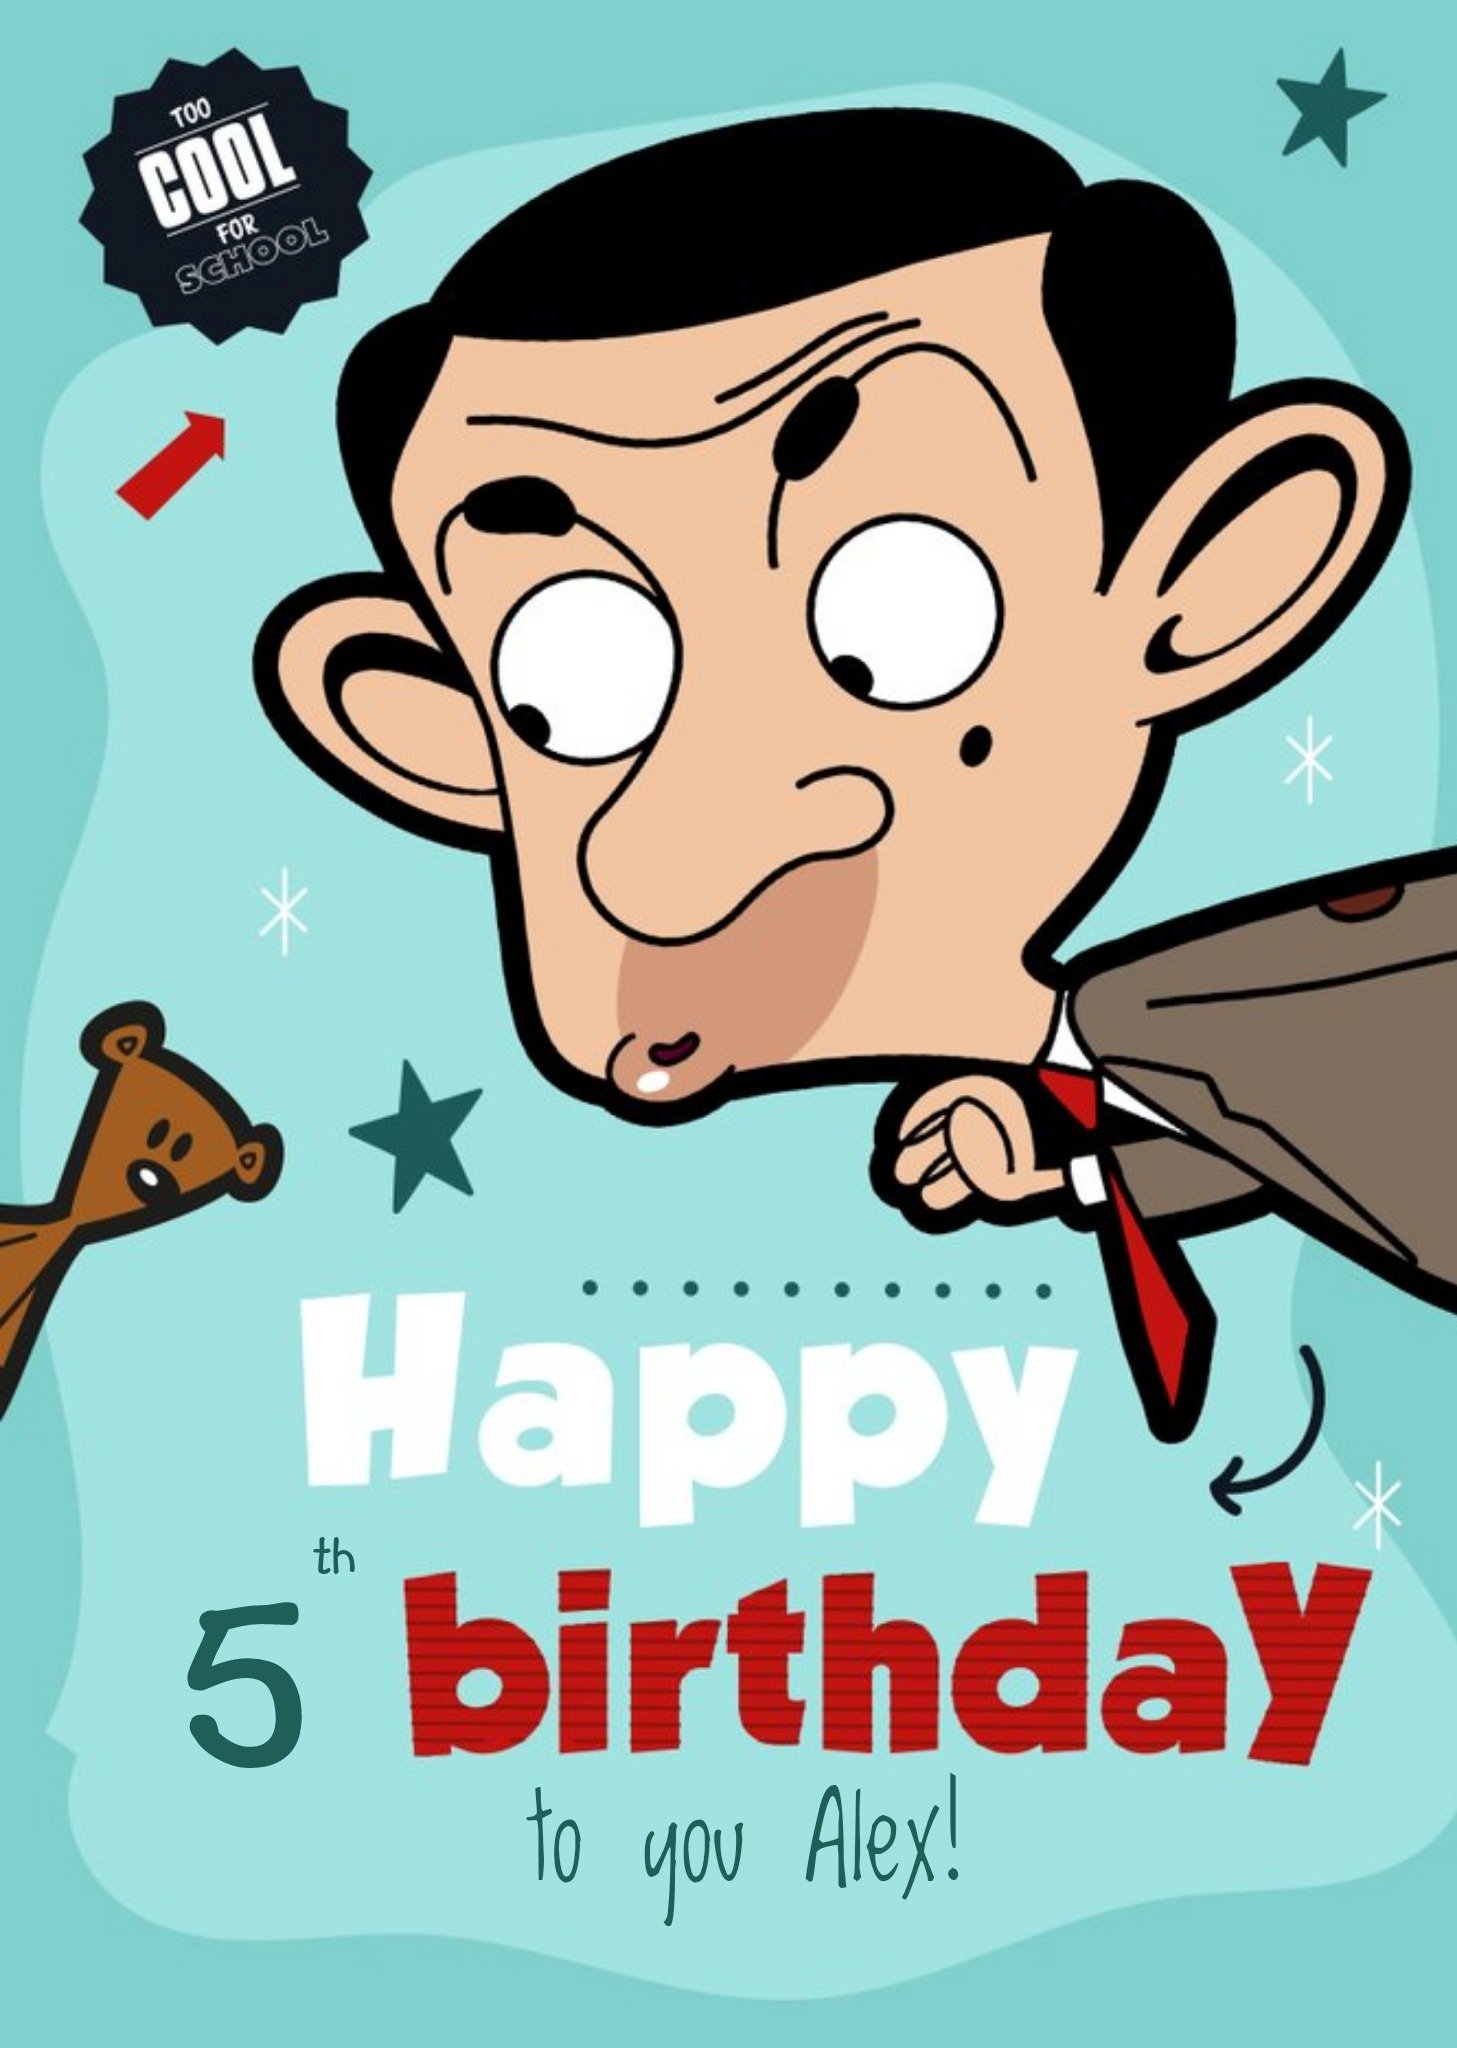 Moonpig Mr Bean Illustrated 5th Birthday Card Ecard